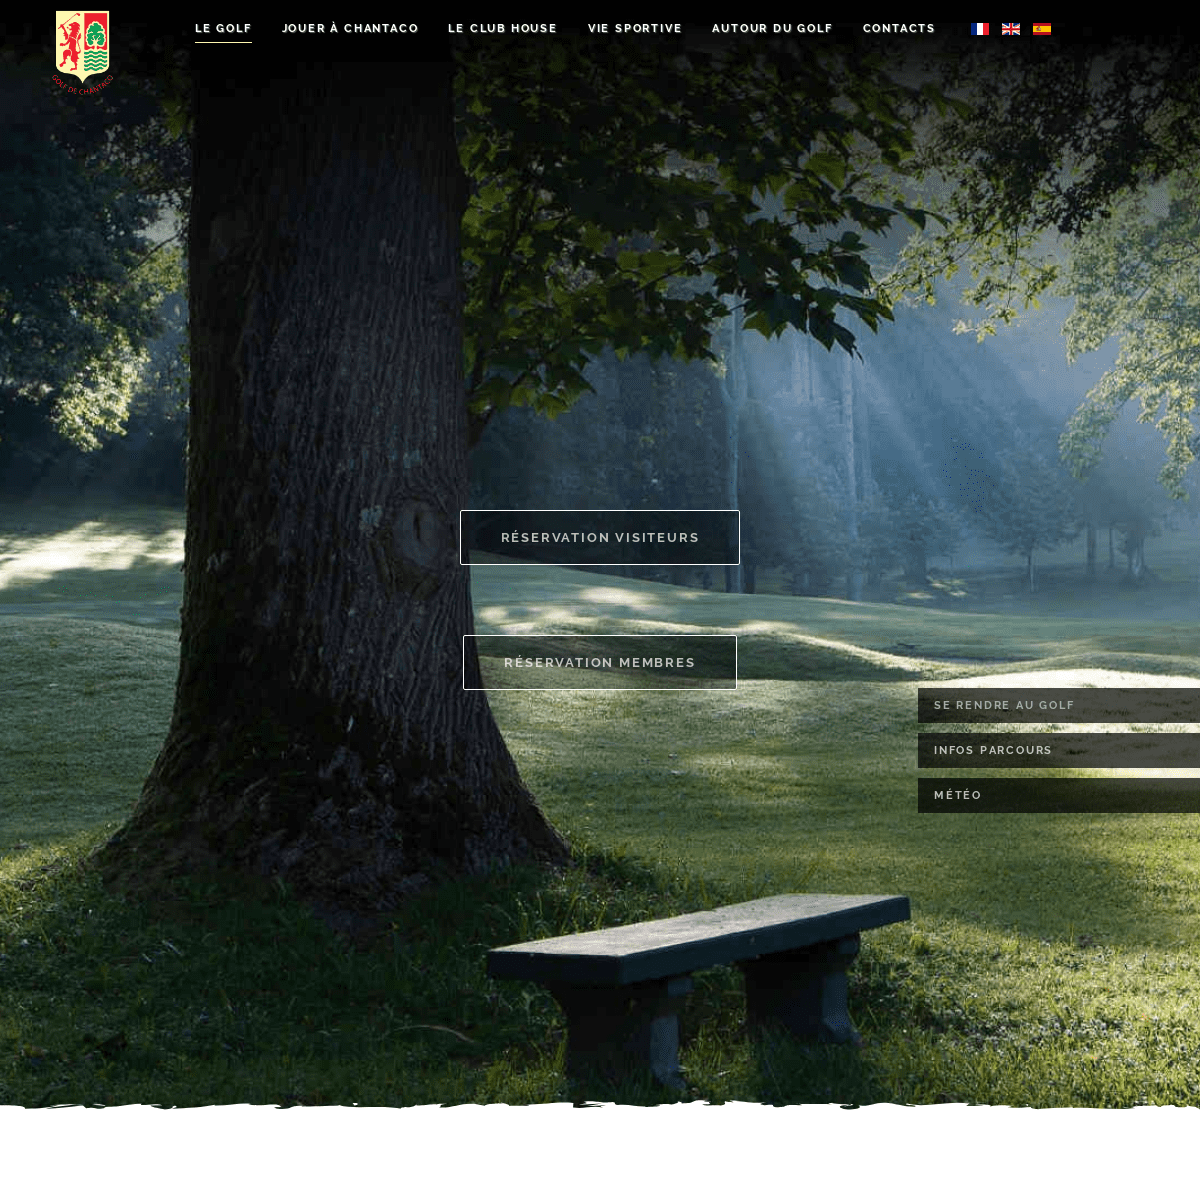 Le golf - Accueil | Golf Chantaco | Saint-Jean-de-Luz